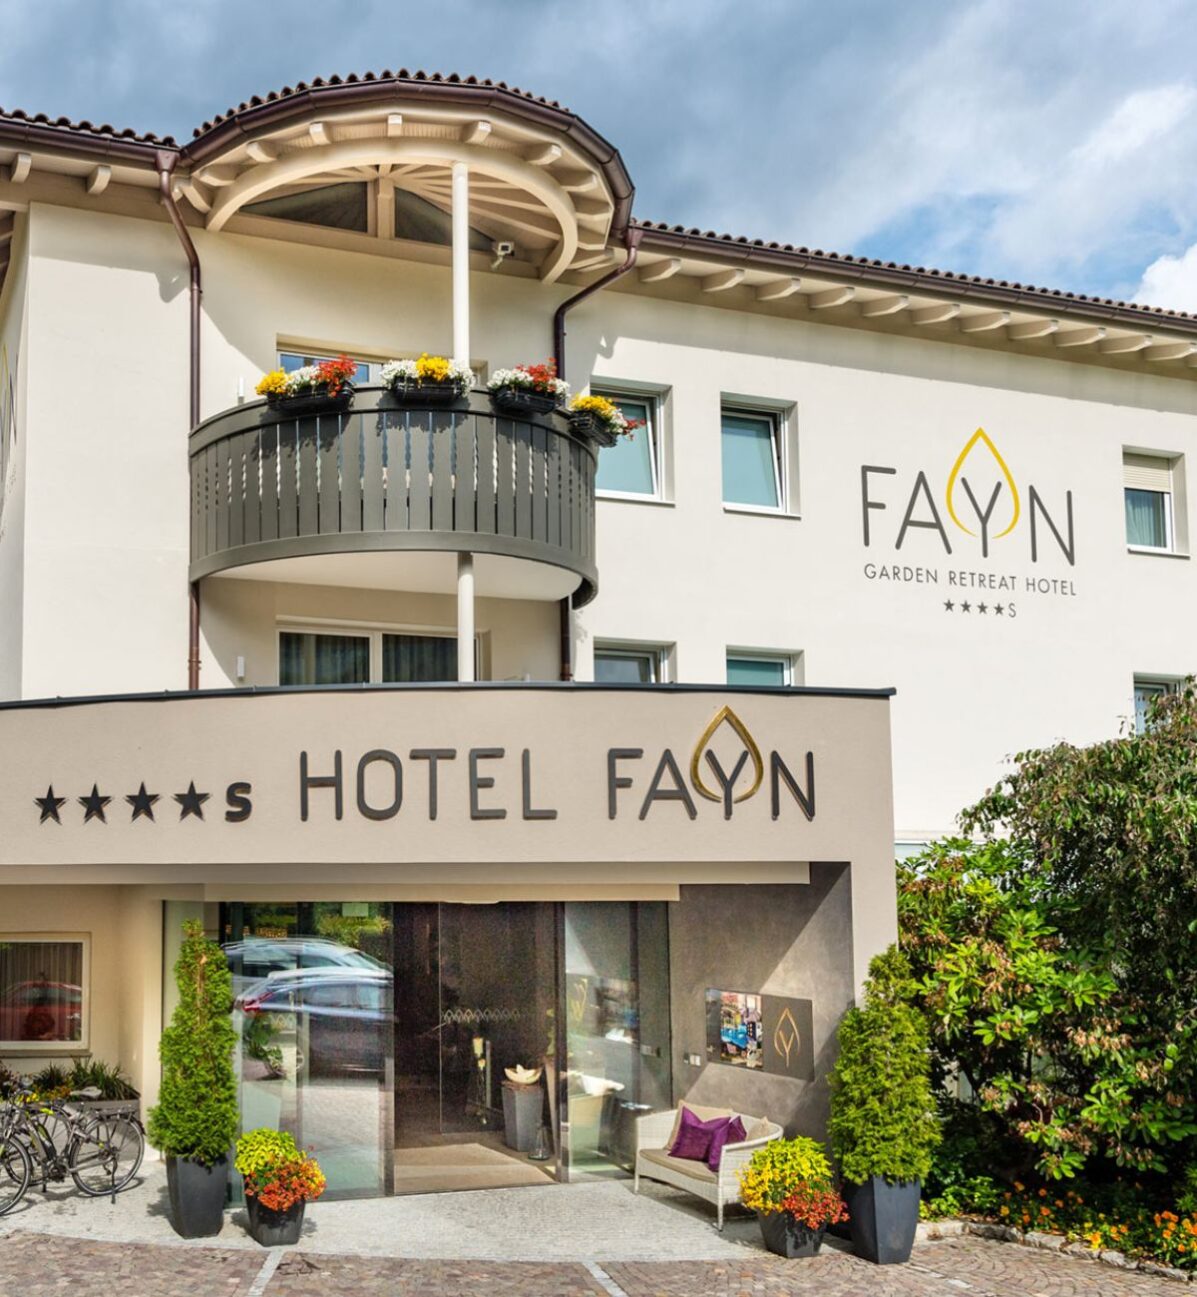 Hotel Fayn Garden Retreat **** in Algund